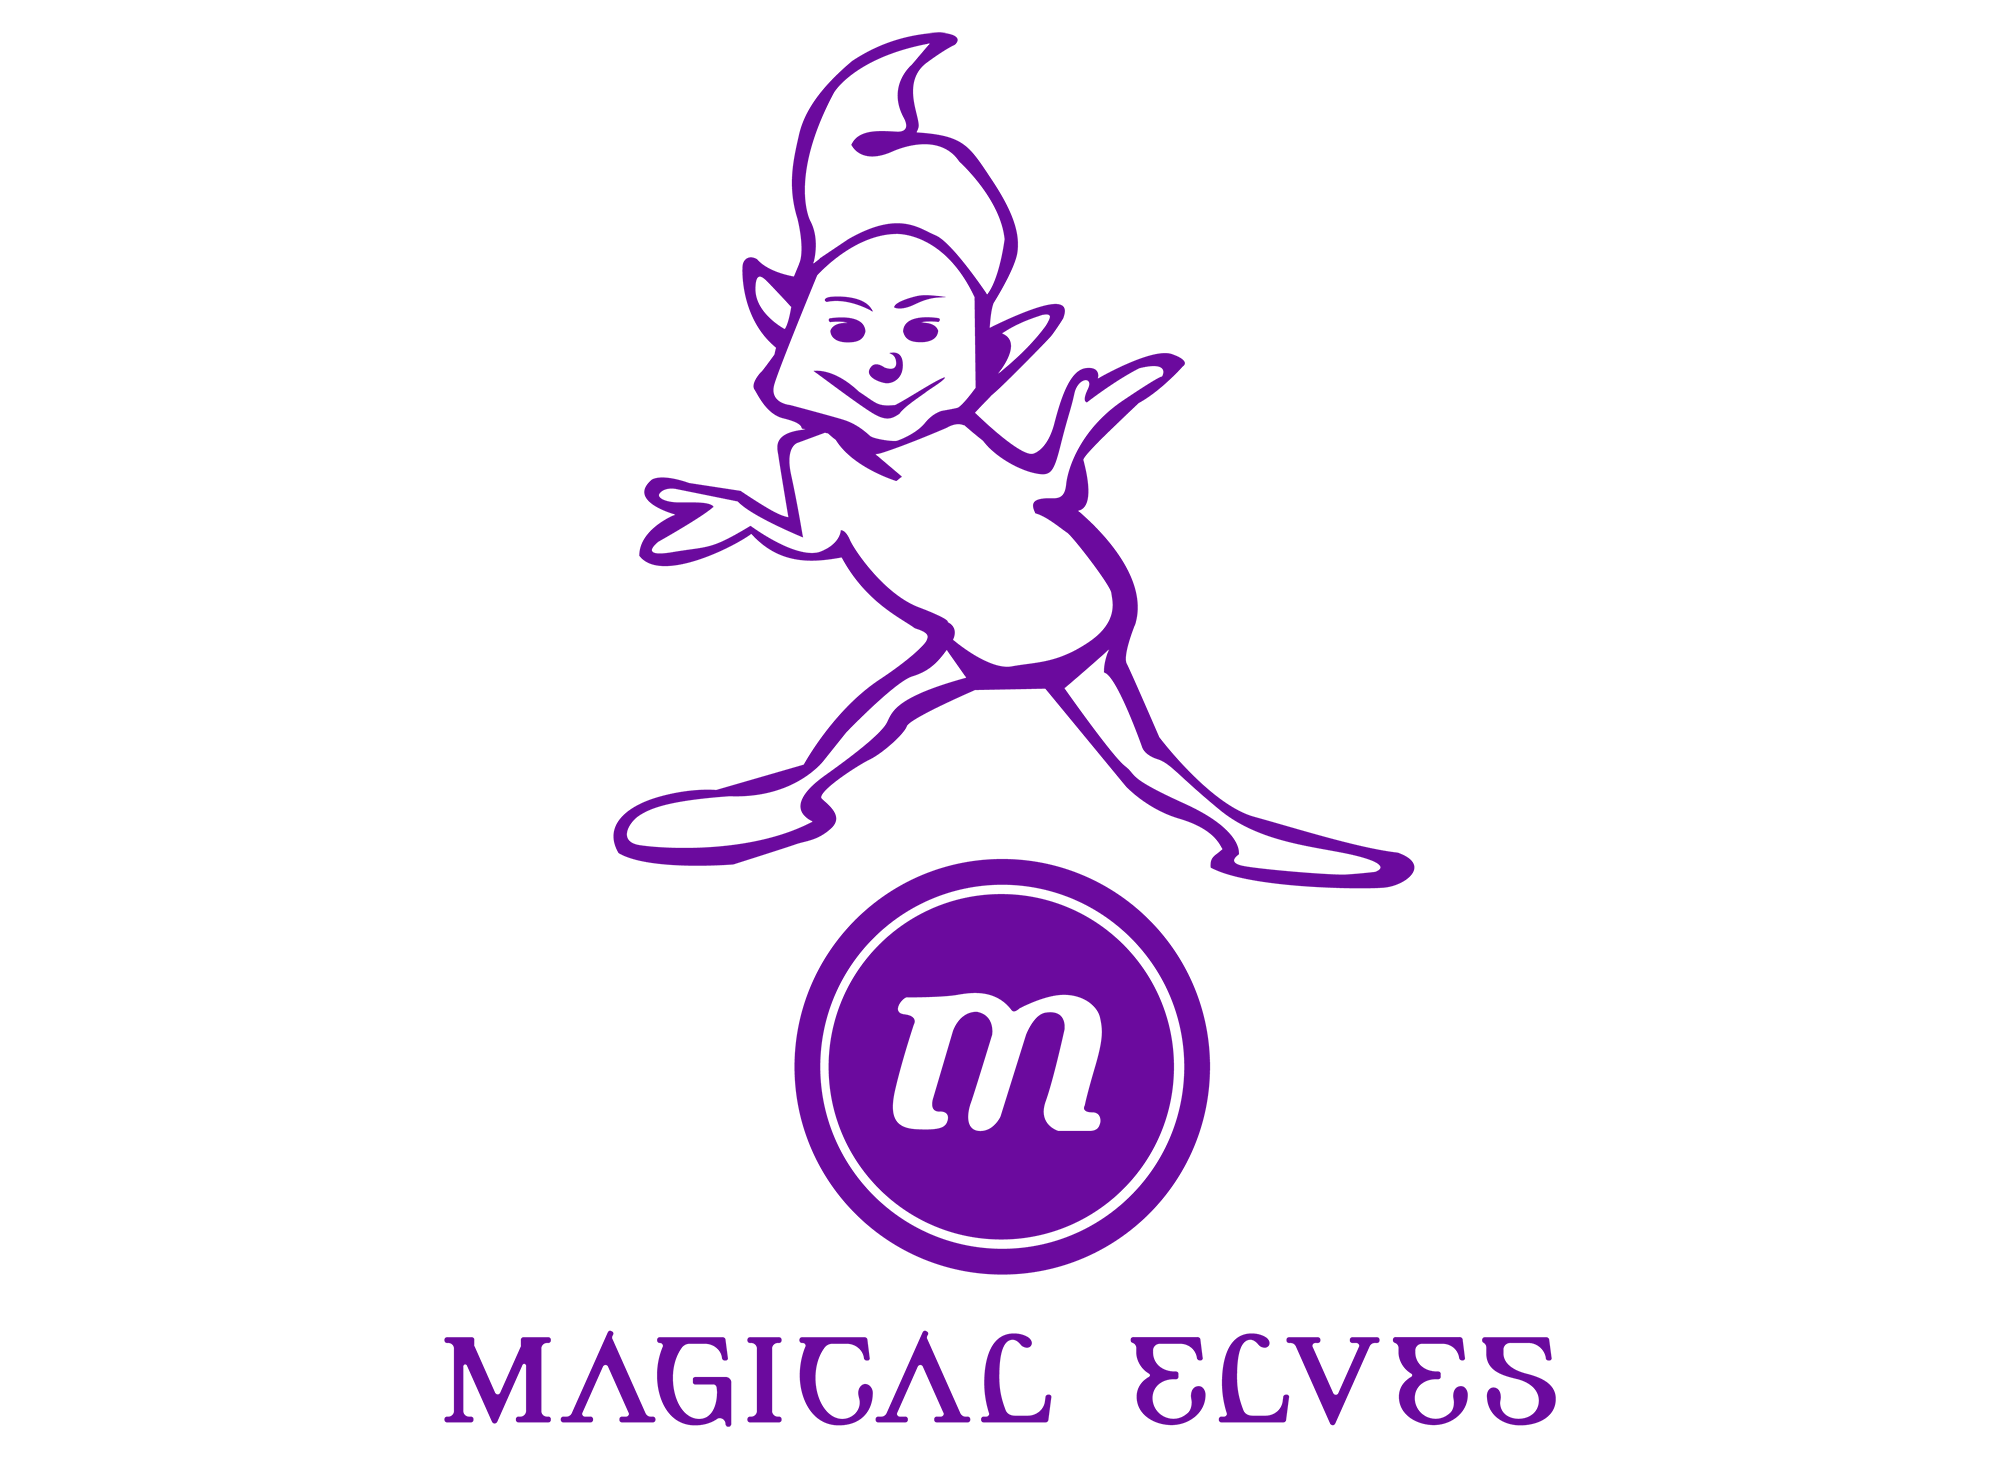 Magical Elves